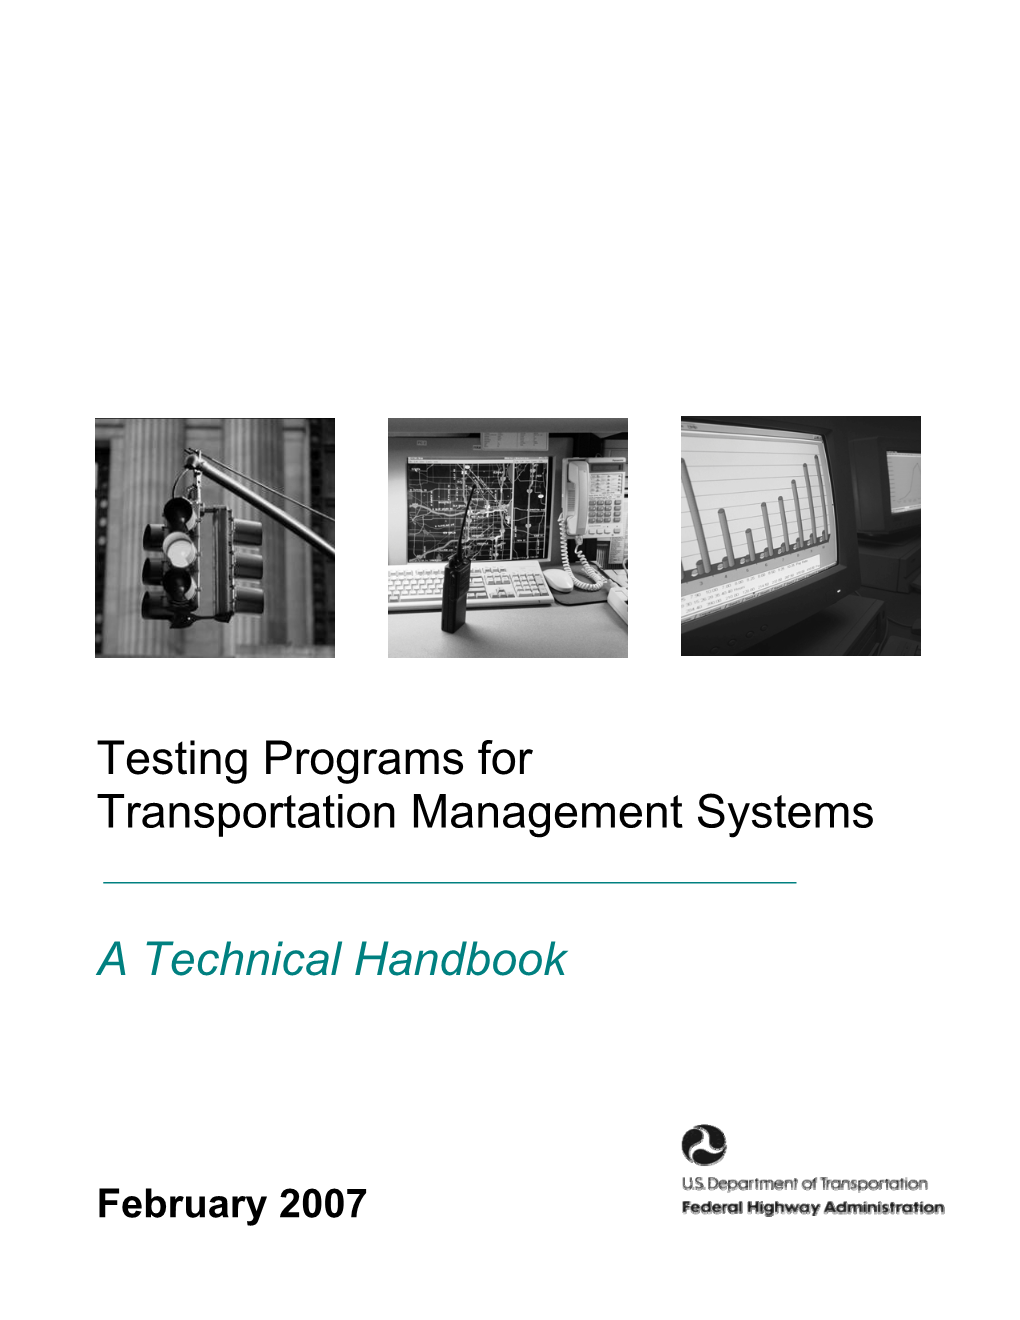 Testing Handbook For